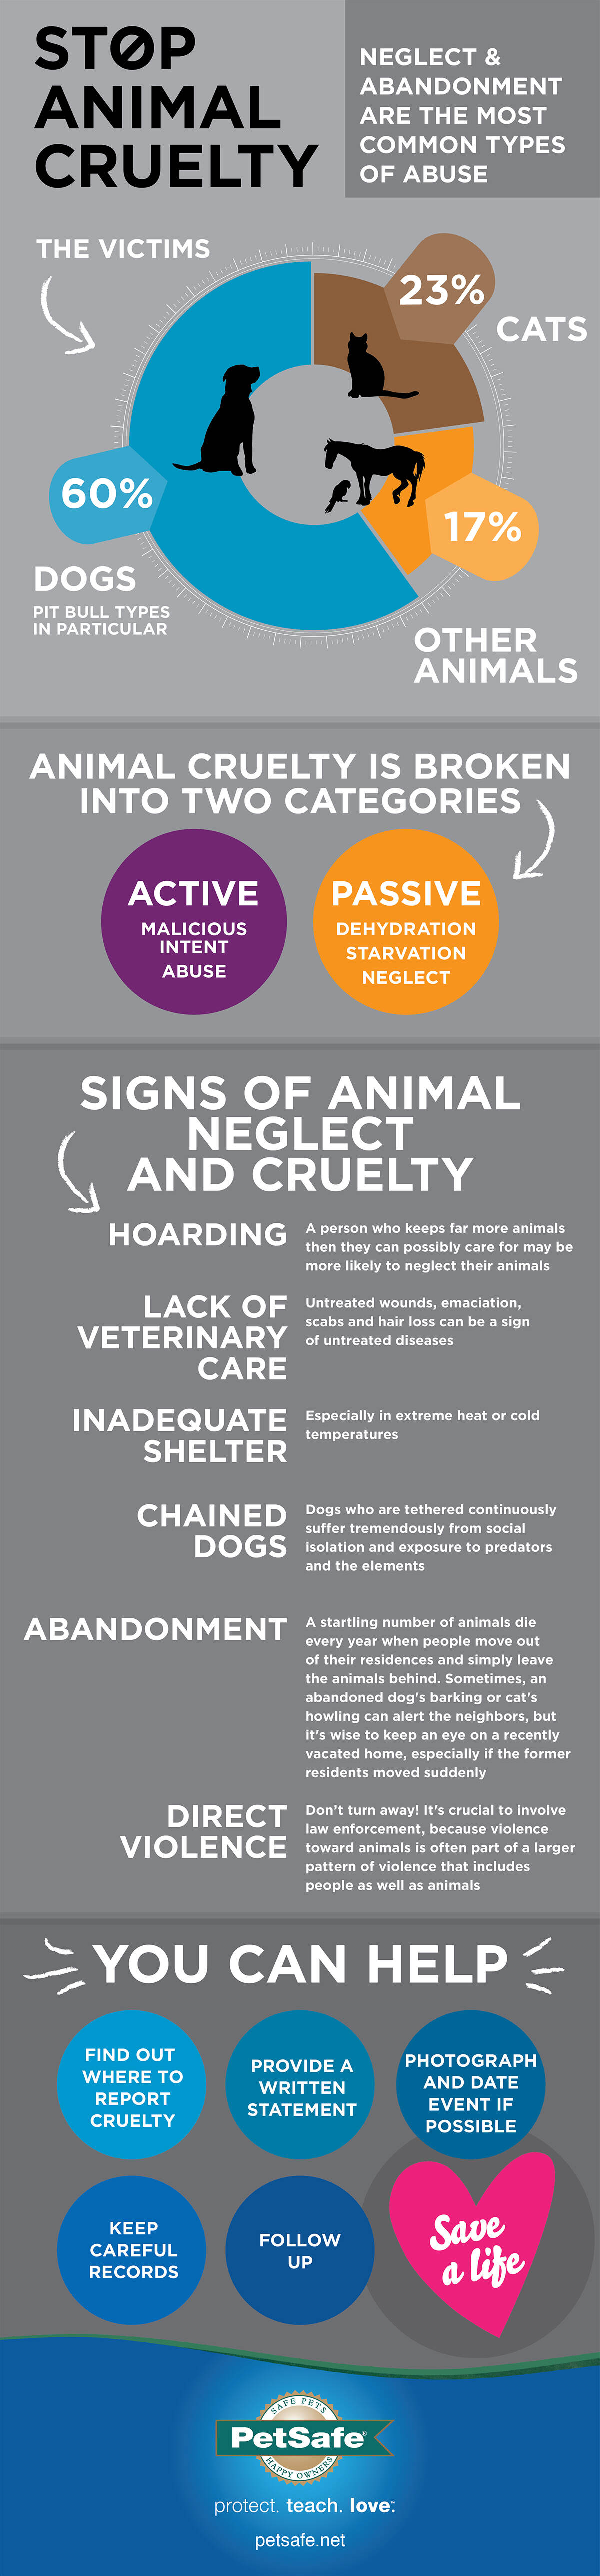 Help Prevent Animal Cruelty | PetSafe®